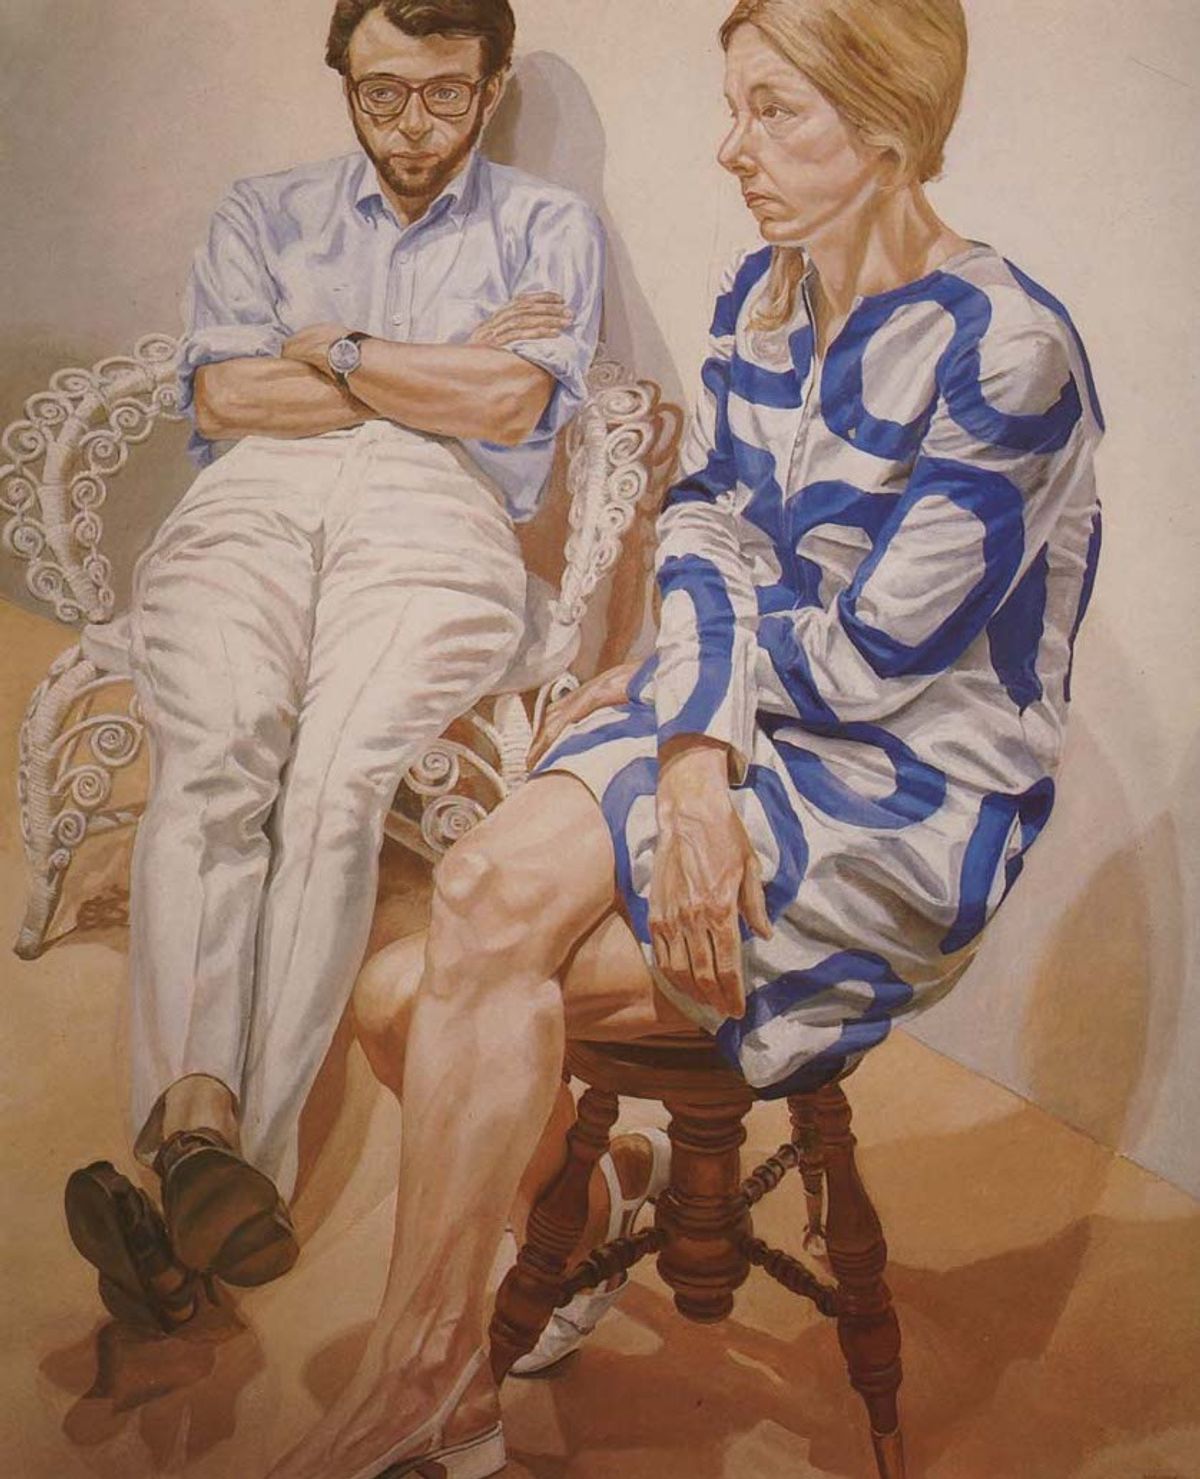 Philip Pearlstein, Portrait de Linda Nochlin et Richard Pommer, 1968, huile sur toile, New York, Brooklyn Museum. Photo Éric de Chassey